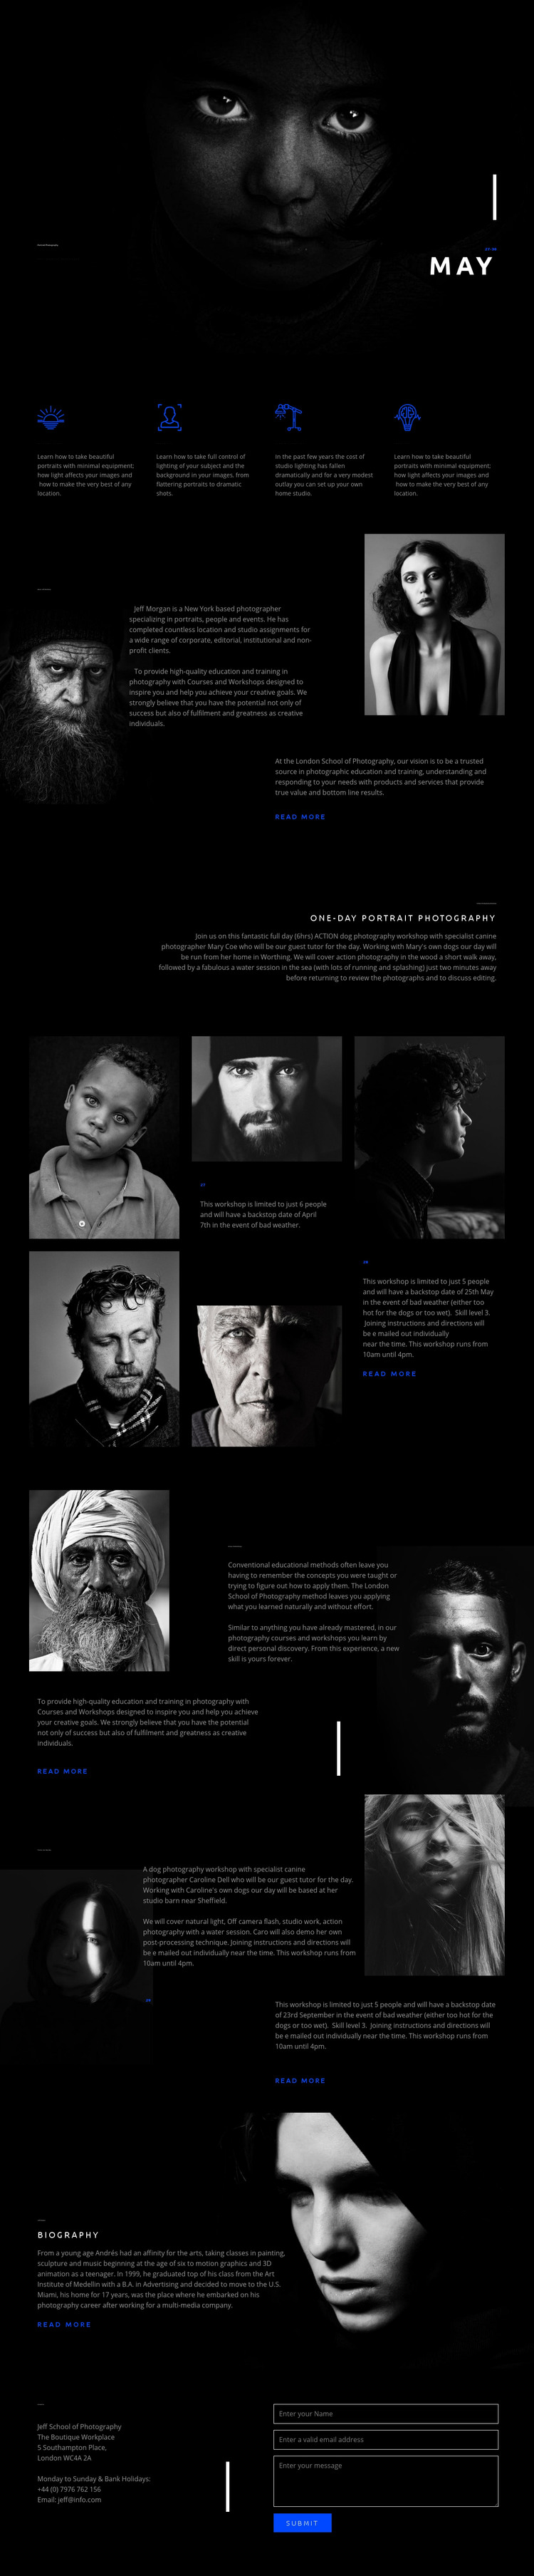 Amazing portrait art Homepage Design